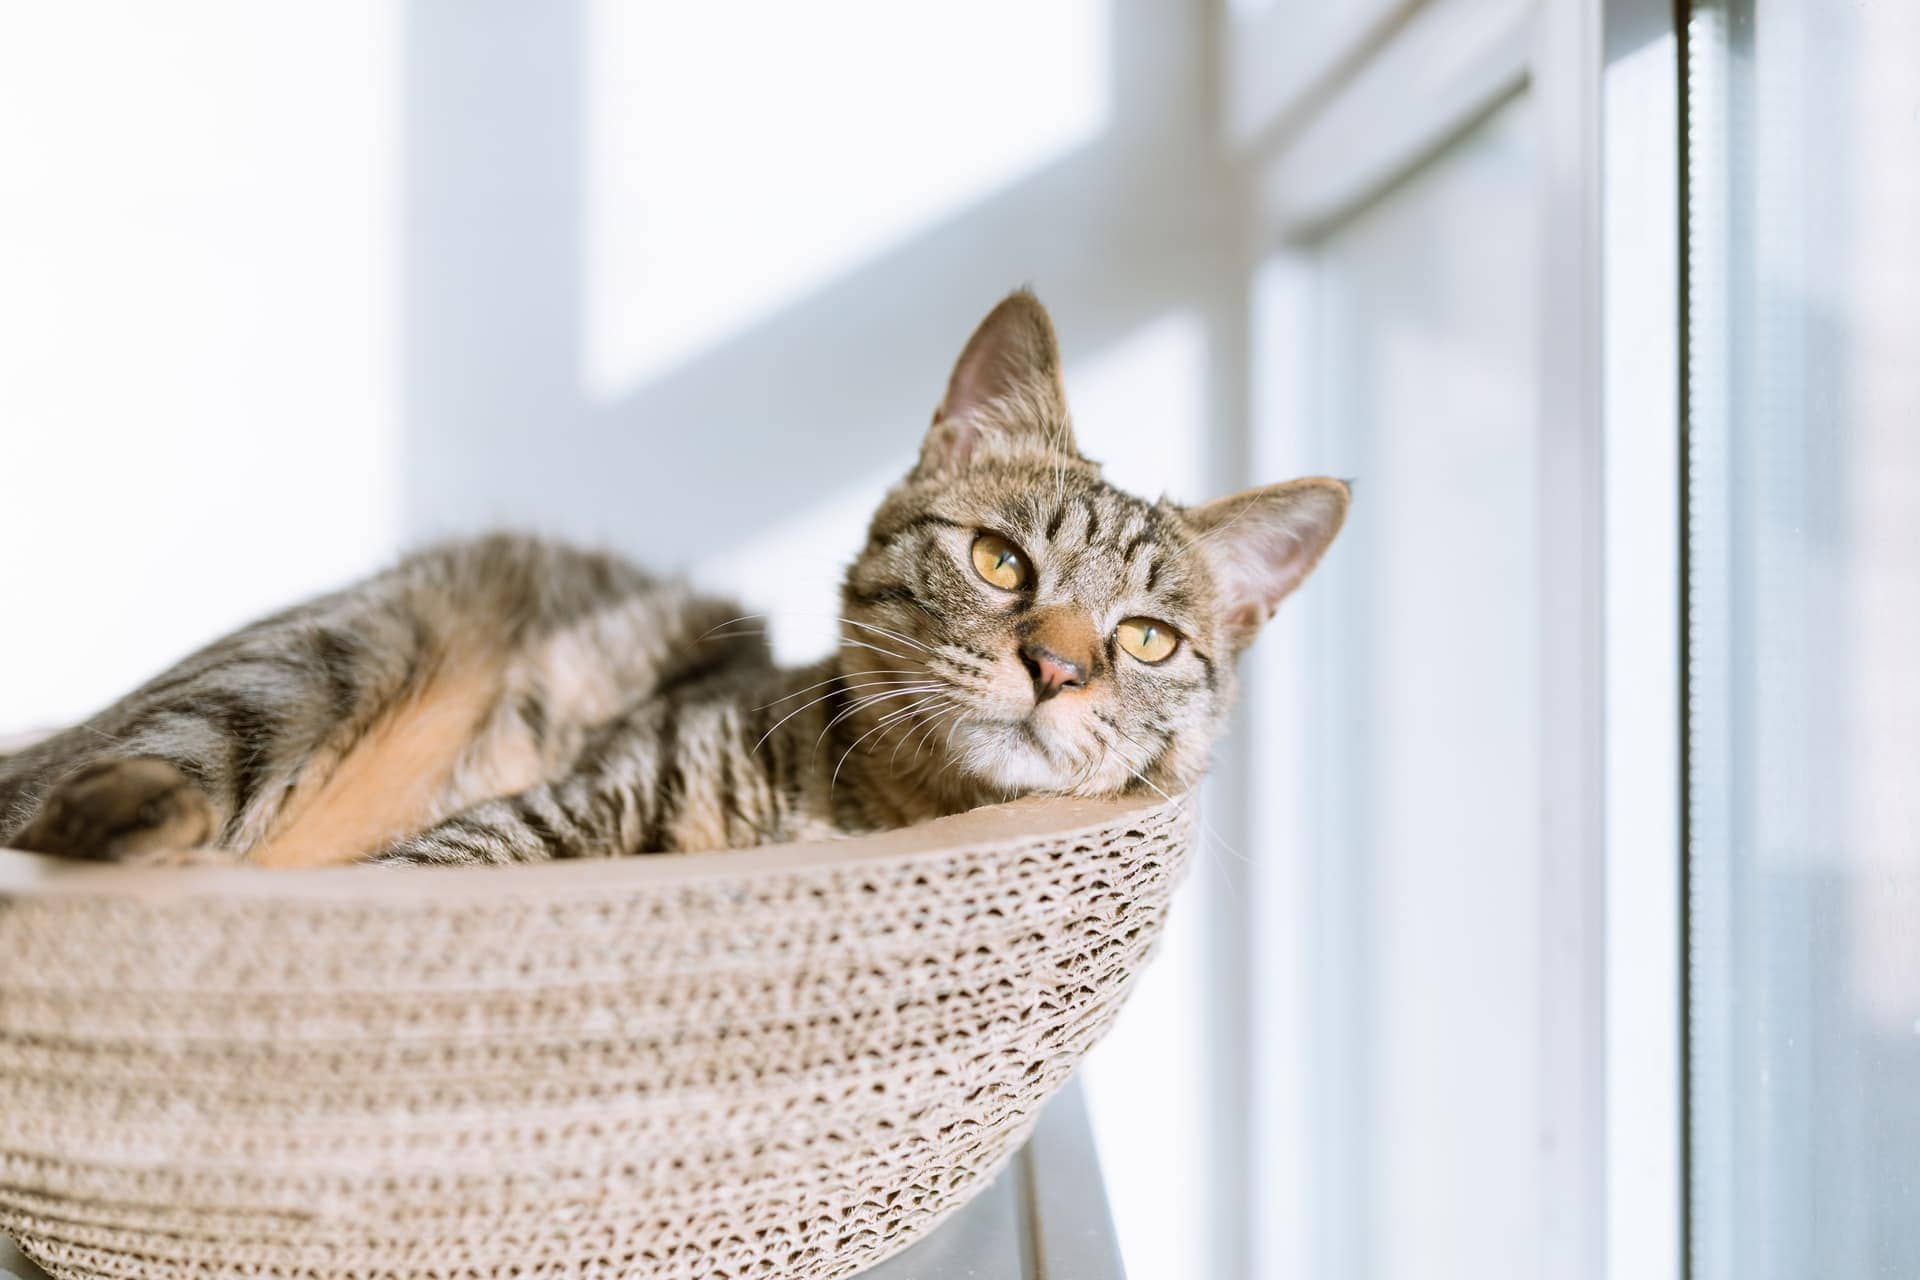 cat resting on a basket hammock